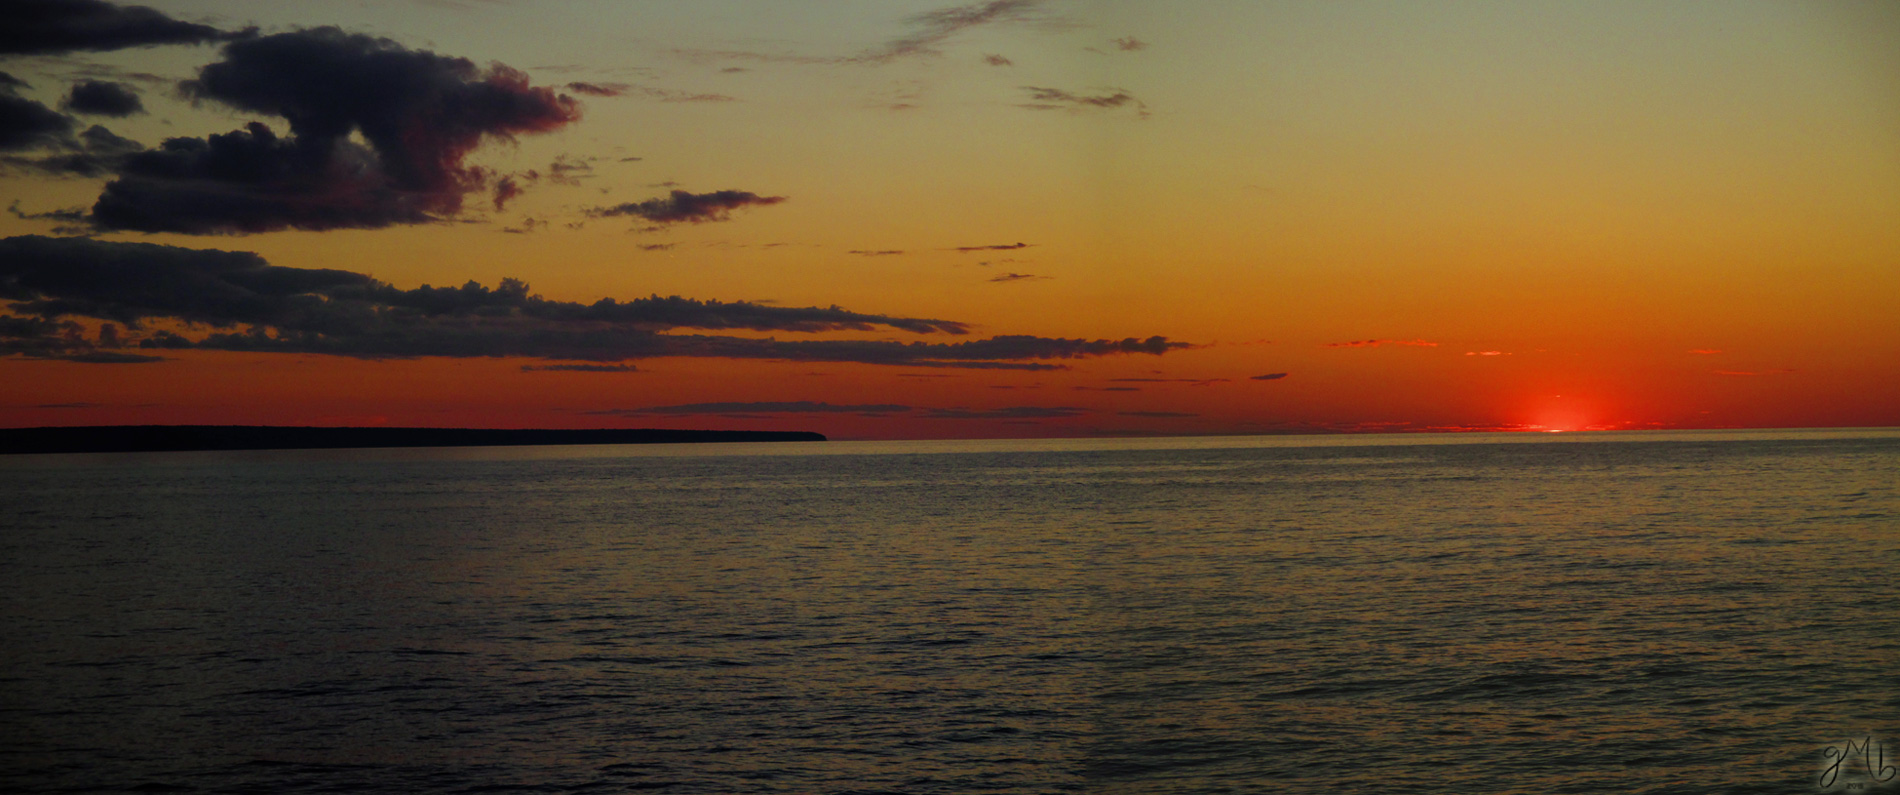 Sunset over Grand Island.